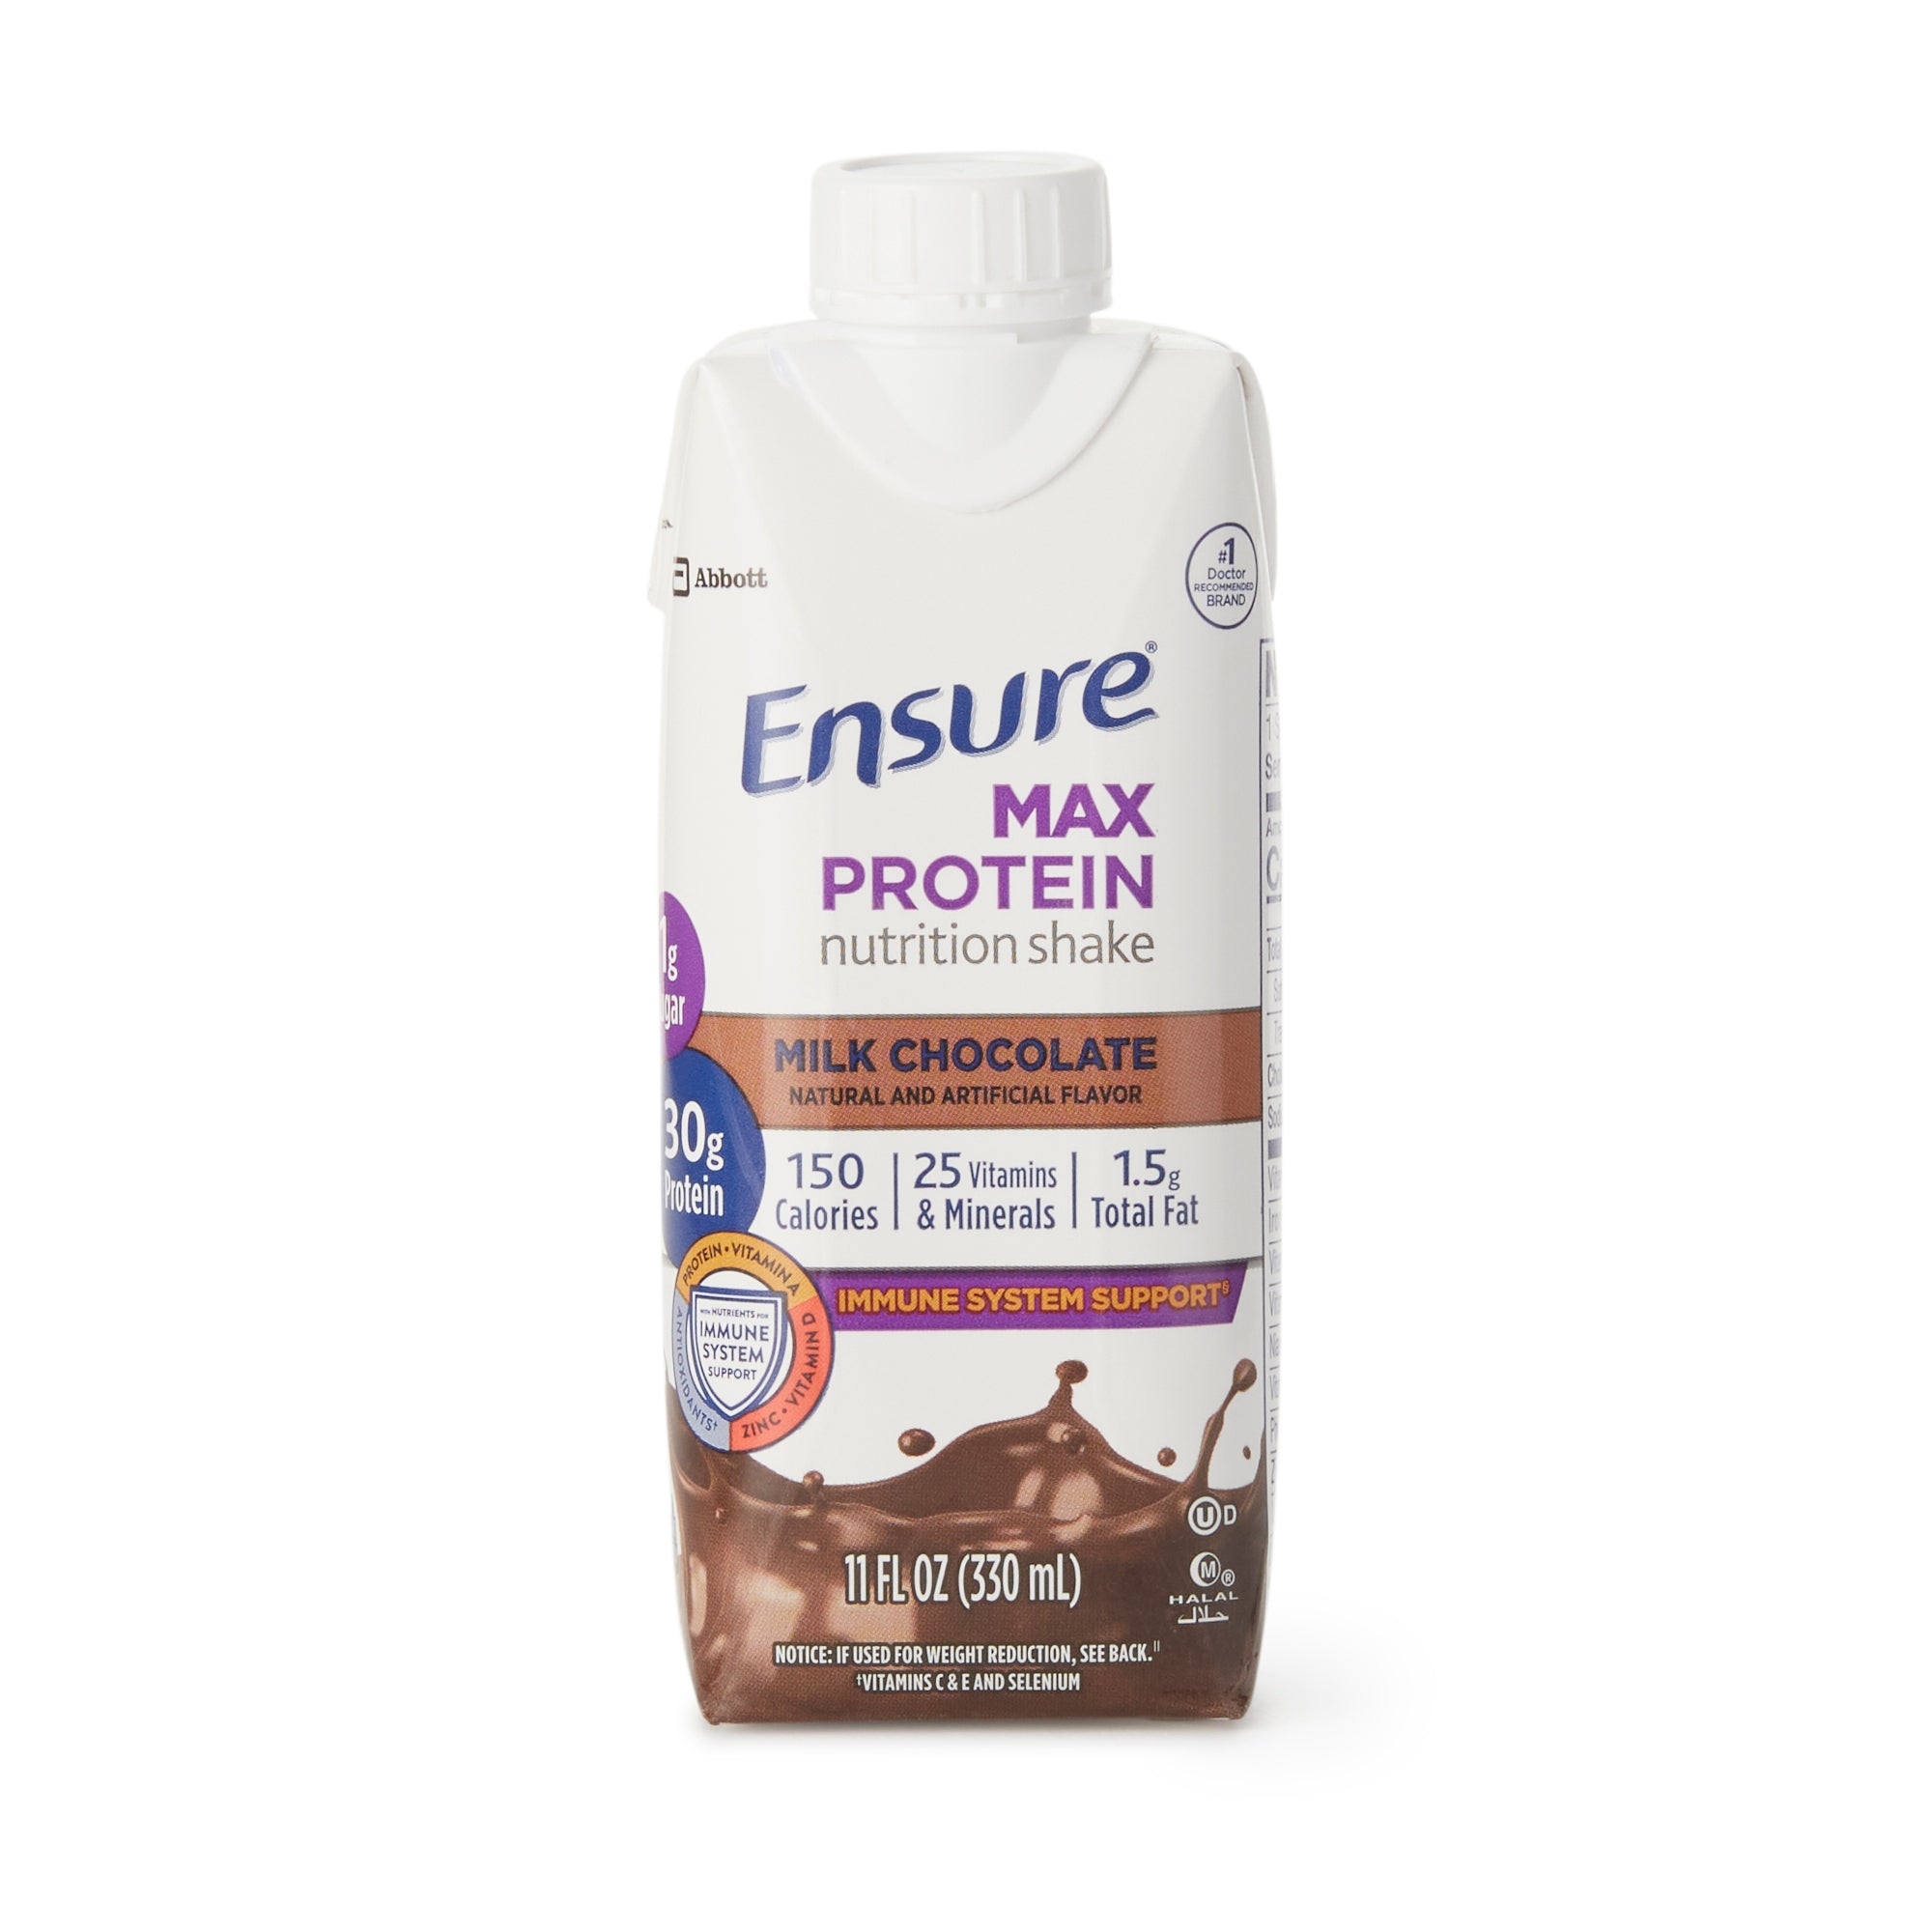 Ensure Max Protein Nutrition Shake - Milk Chocolate, 11oz, 12 Pack